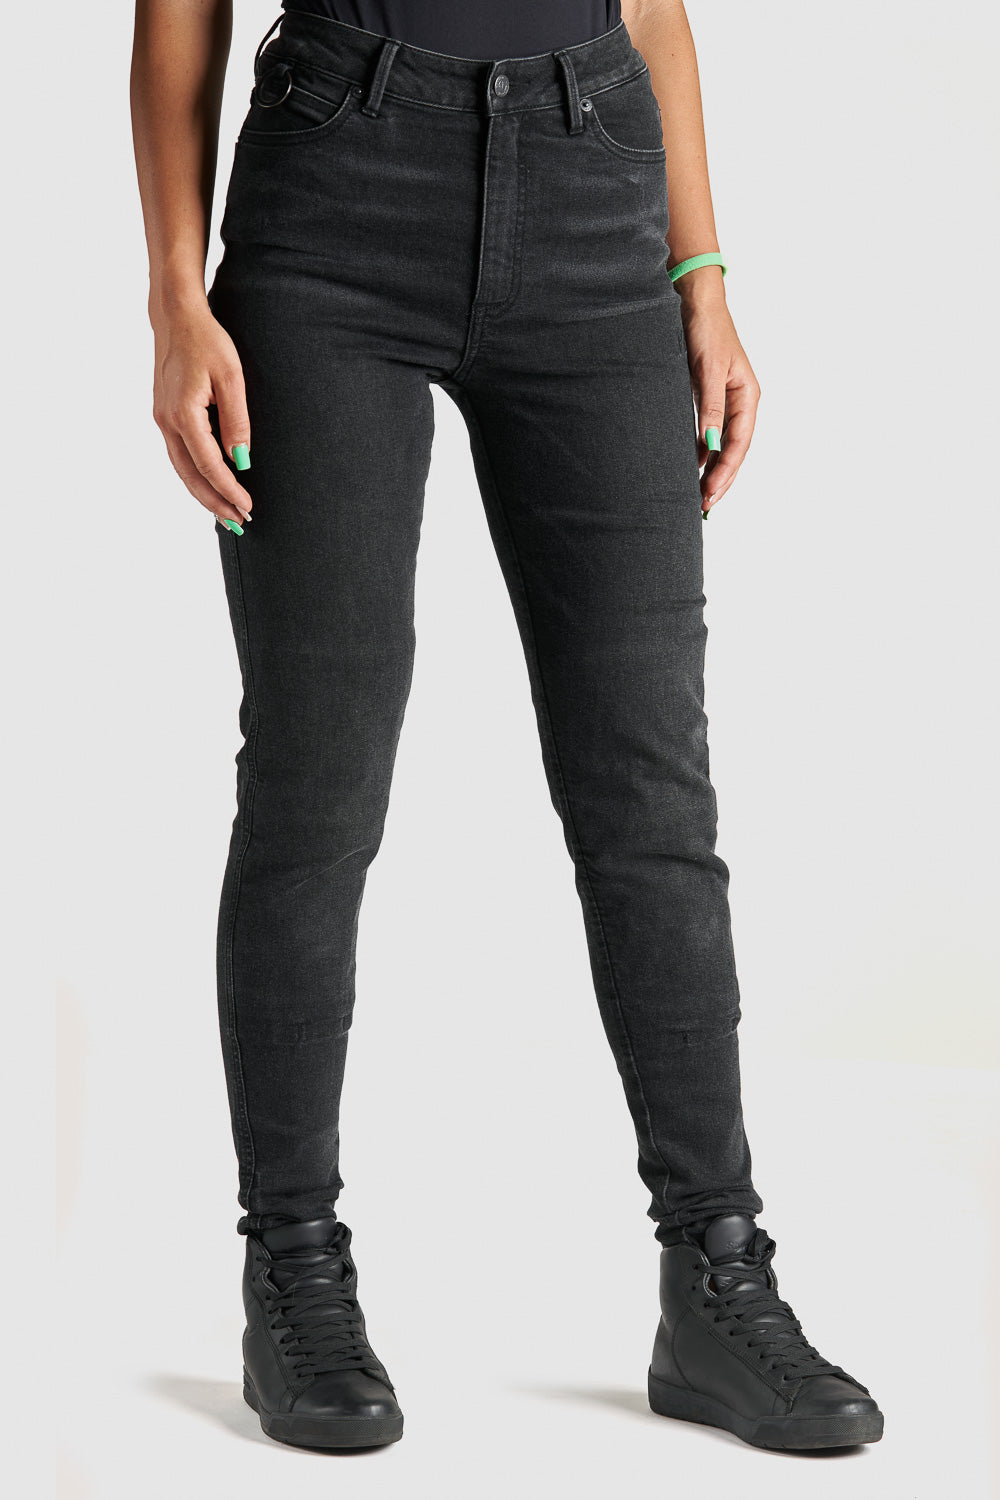 woman's legs wearing black high waist motorcycle jeans